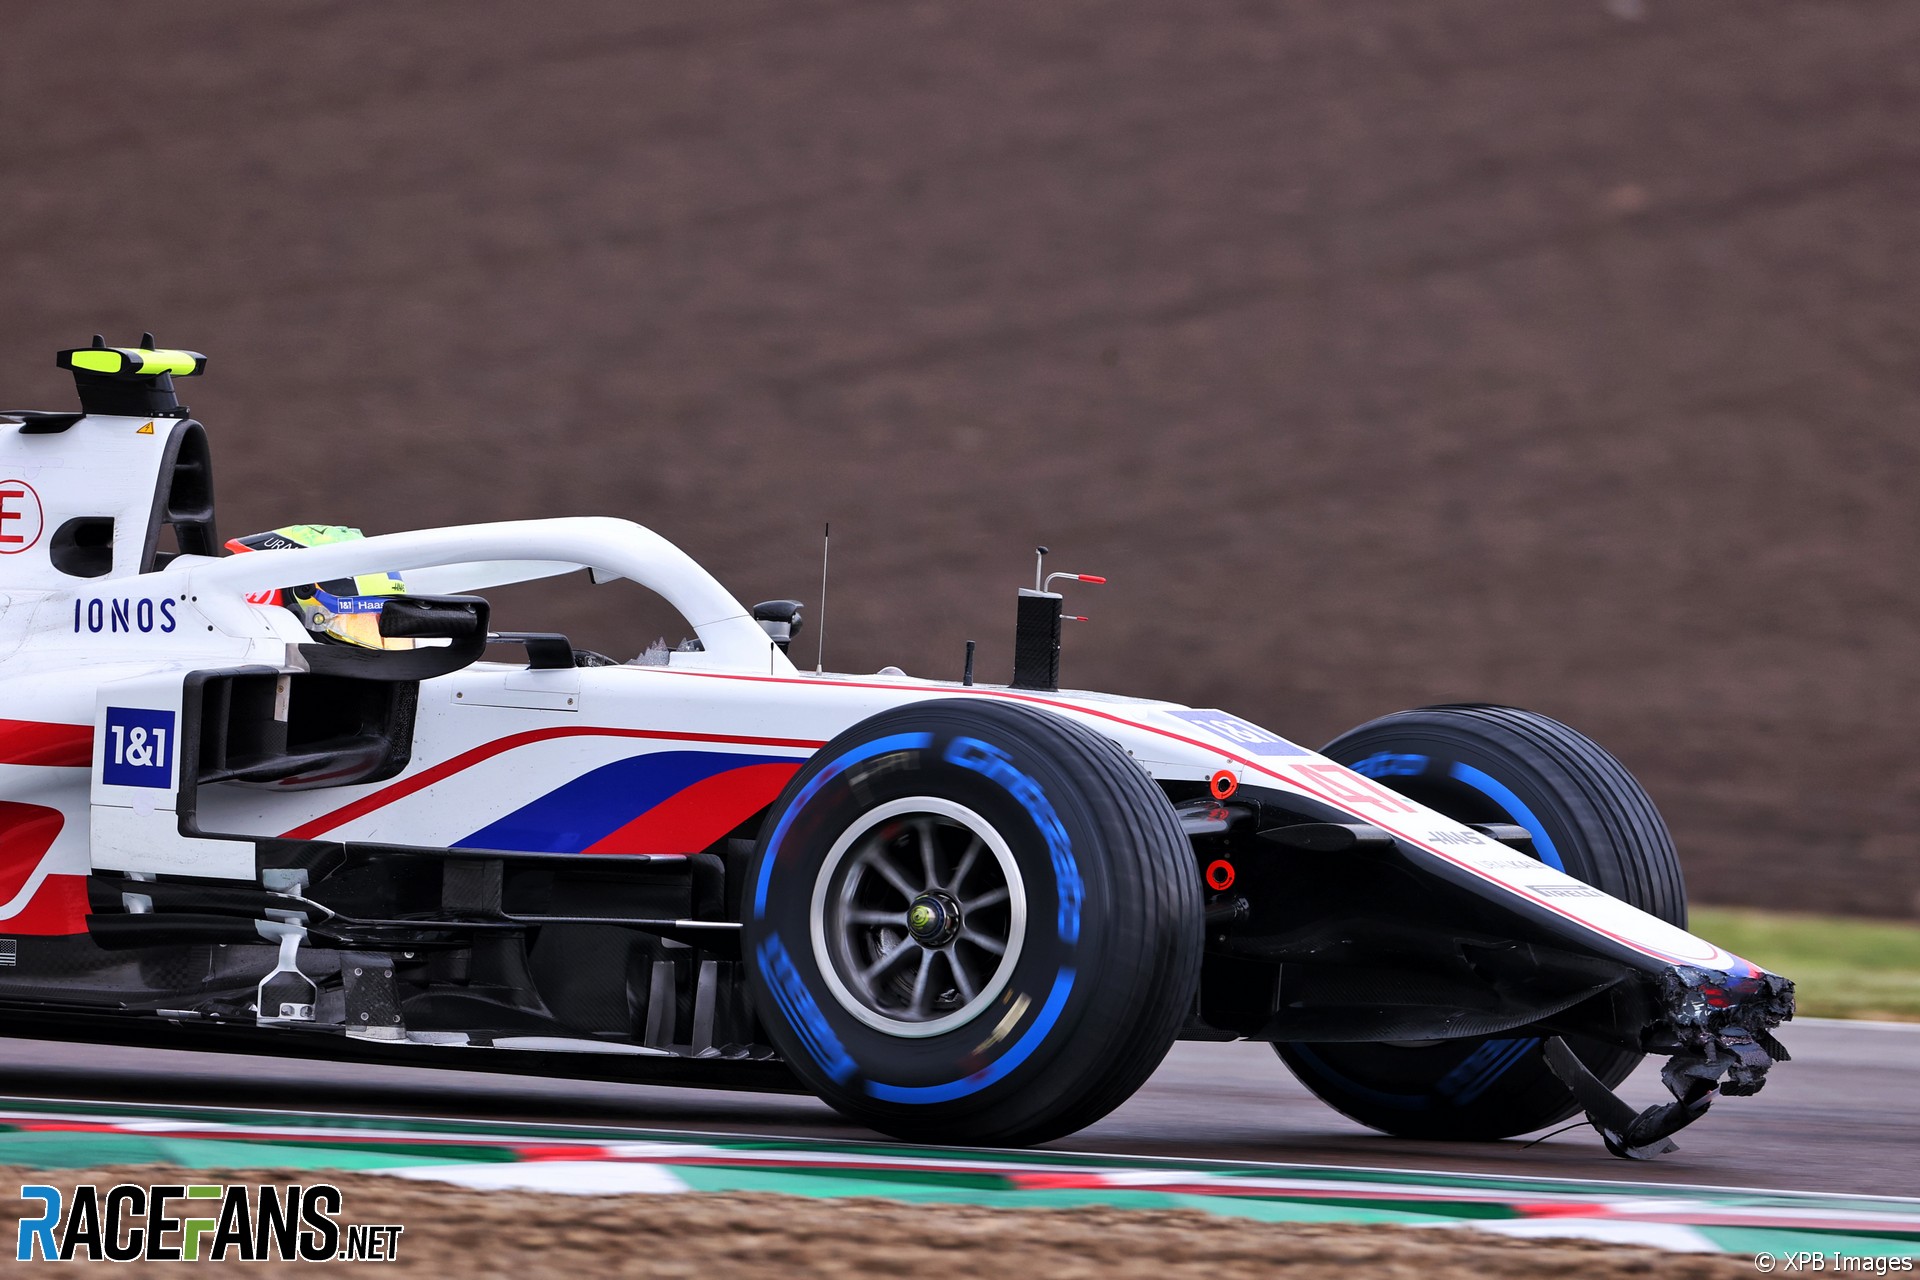 Mick Schumacher, Haas, Imola, 2021 · RaceFans